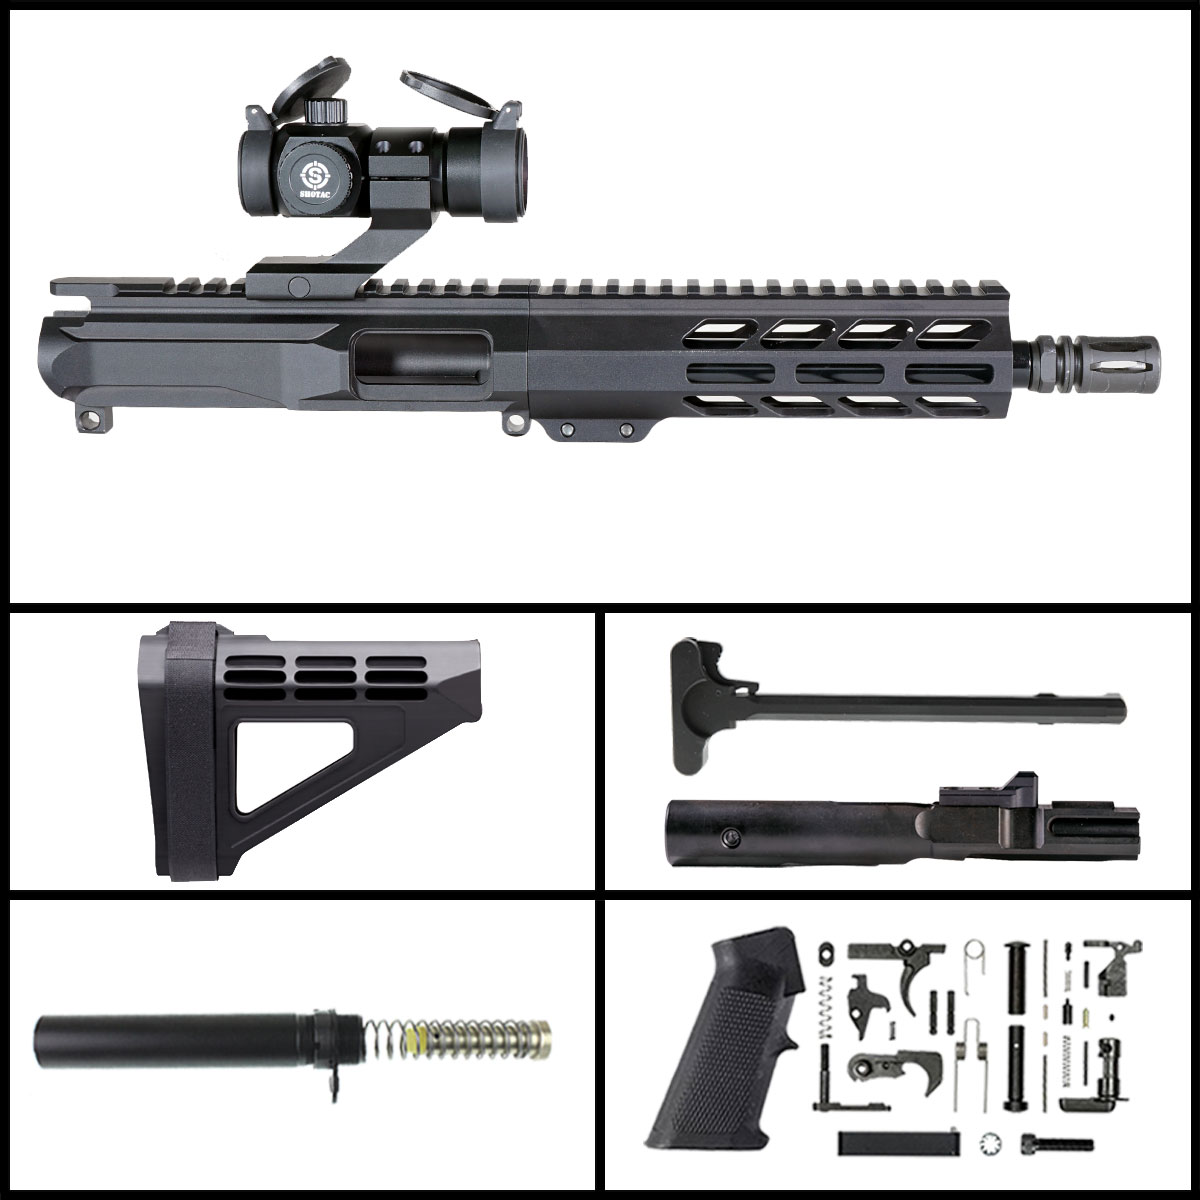 MMC 'Eternal Night Gen 2 w/ Shotac Cantilever' 8.5-inch AR-15 9mm Nitride Pistol Full Build Kit